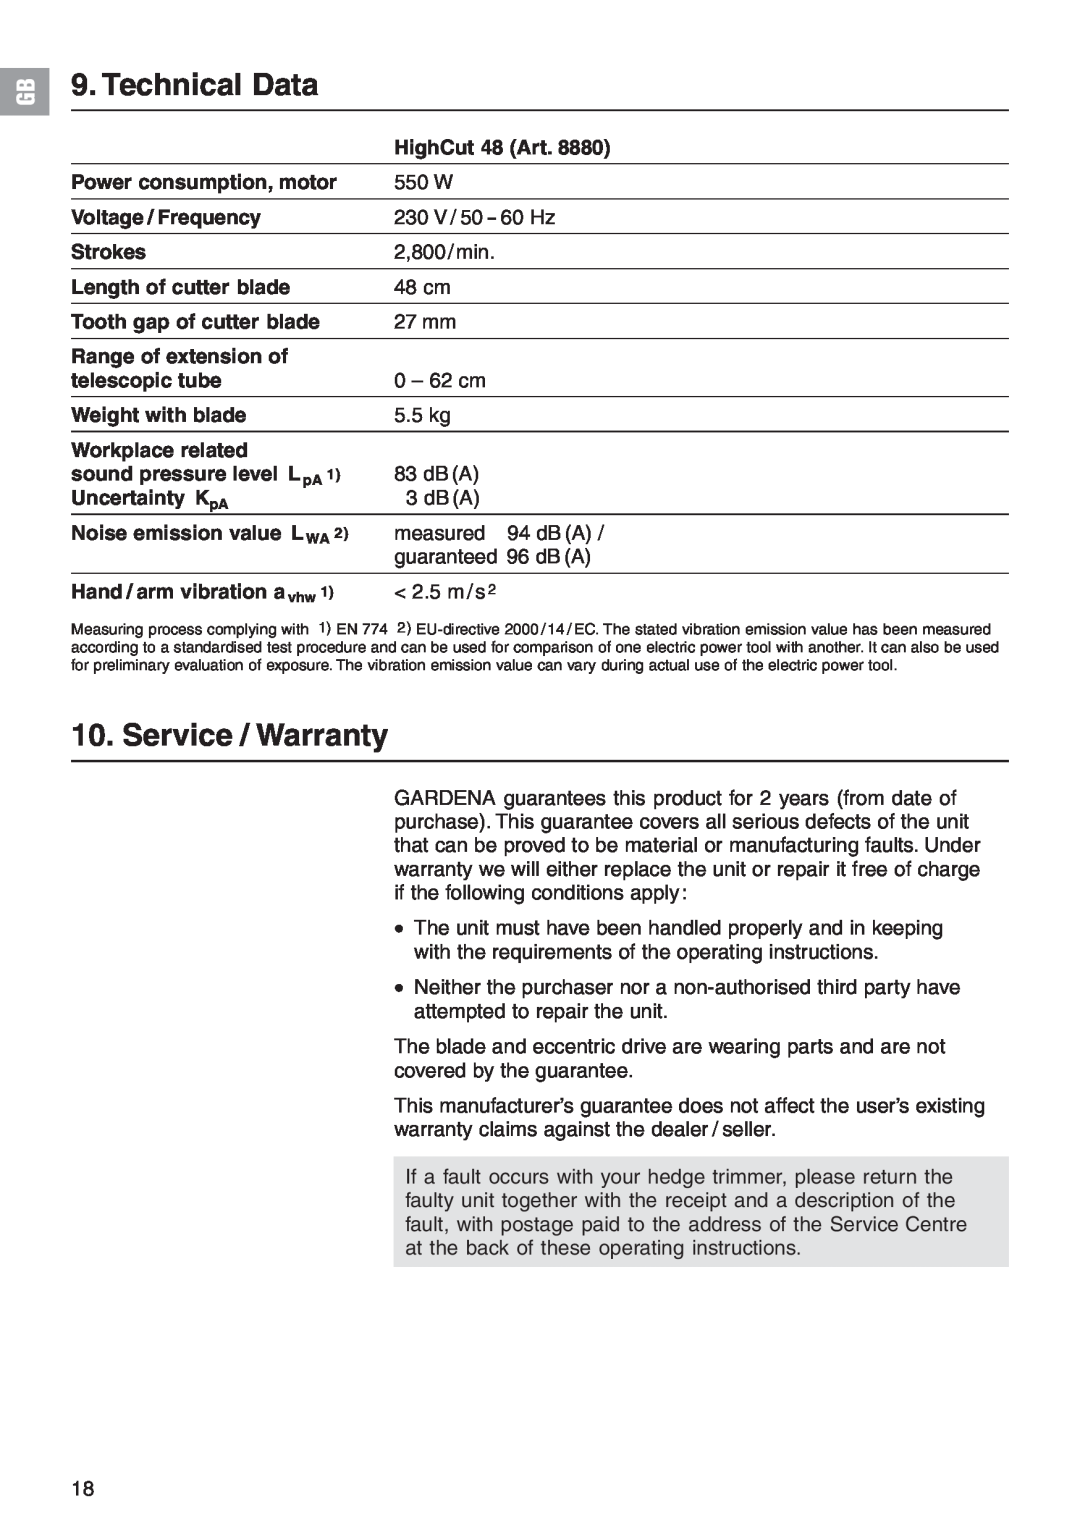 Gardena 48 manual Technical Data, Service / Warranty 